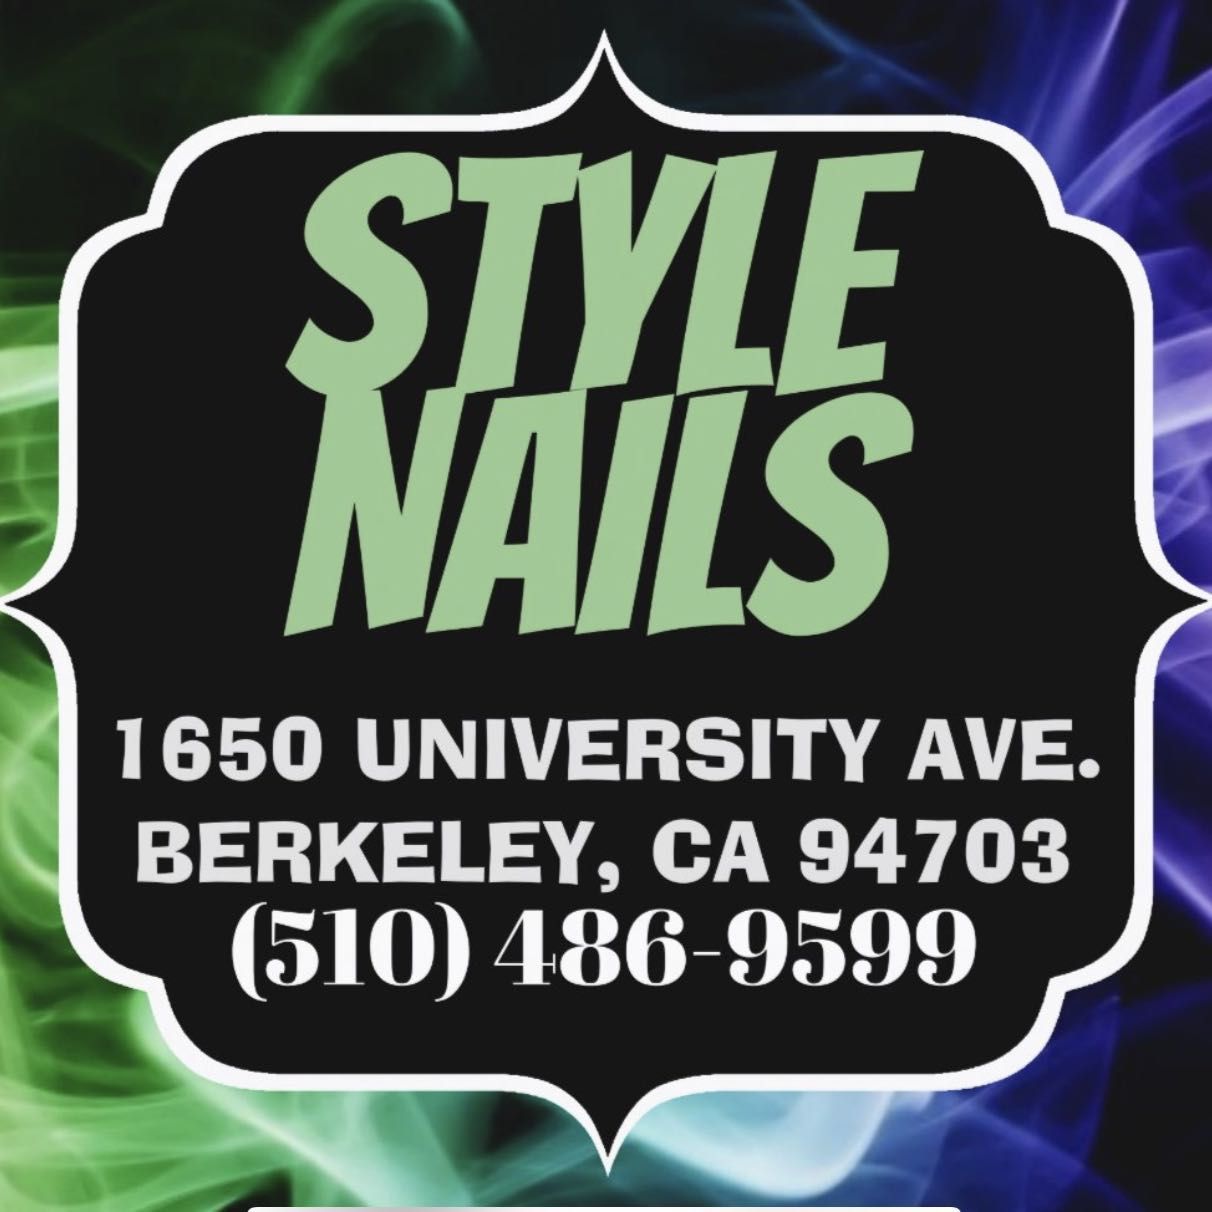 Style Nails, 1650 University Ave, Berkeley, 94703